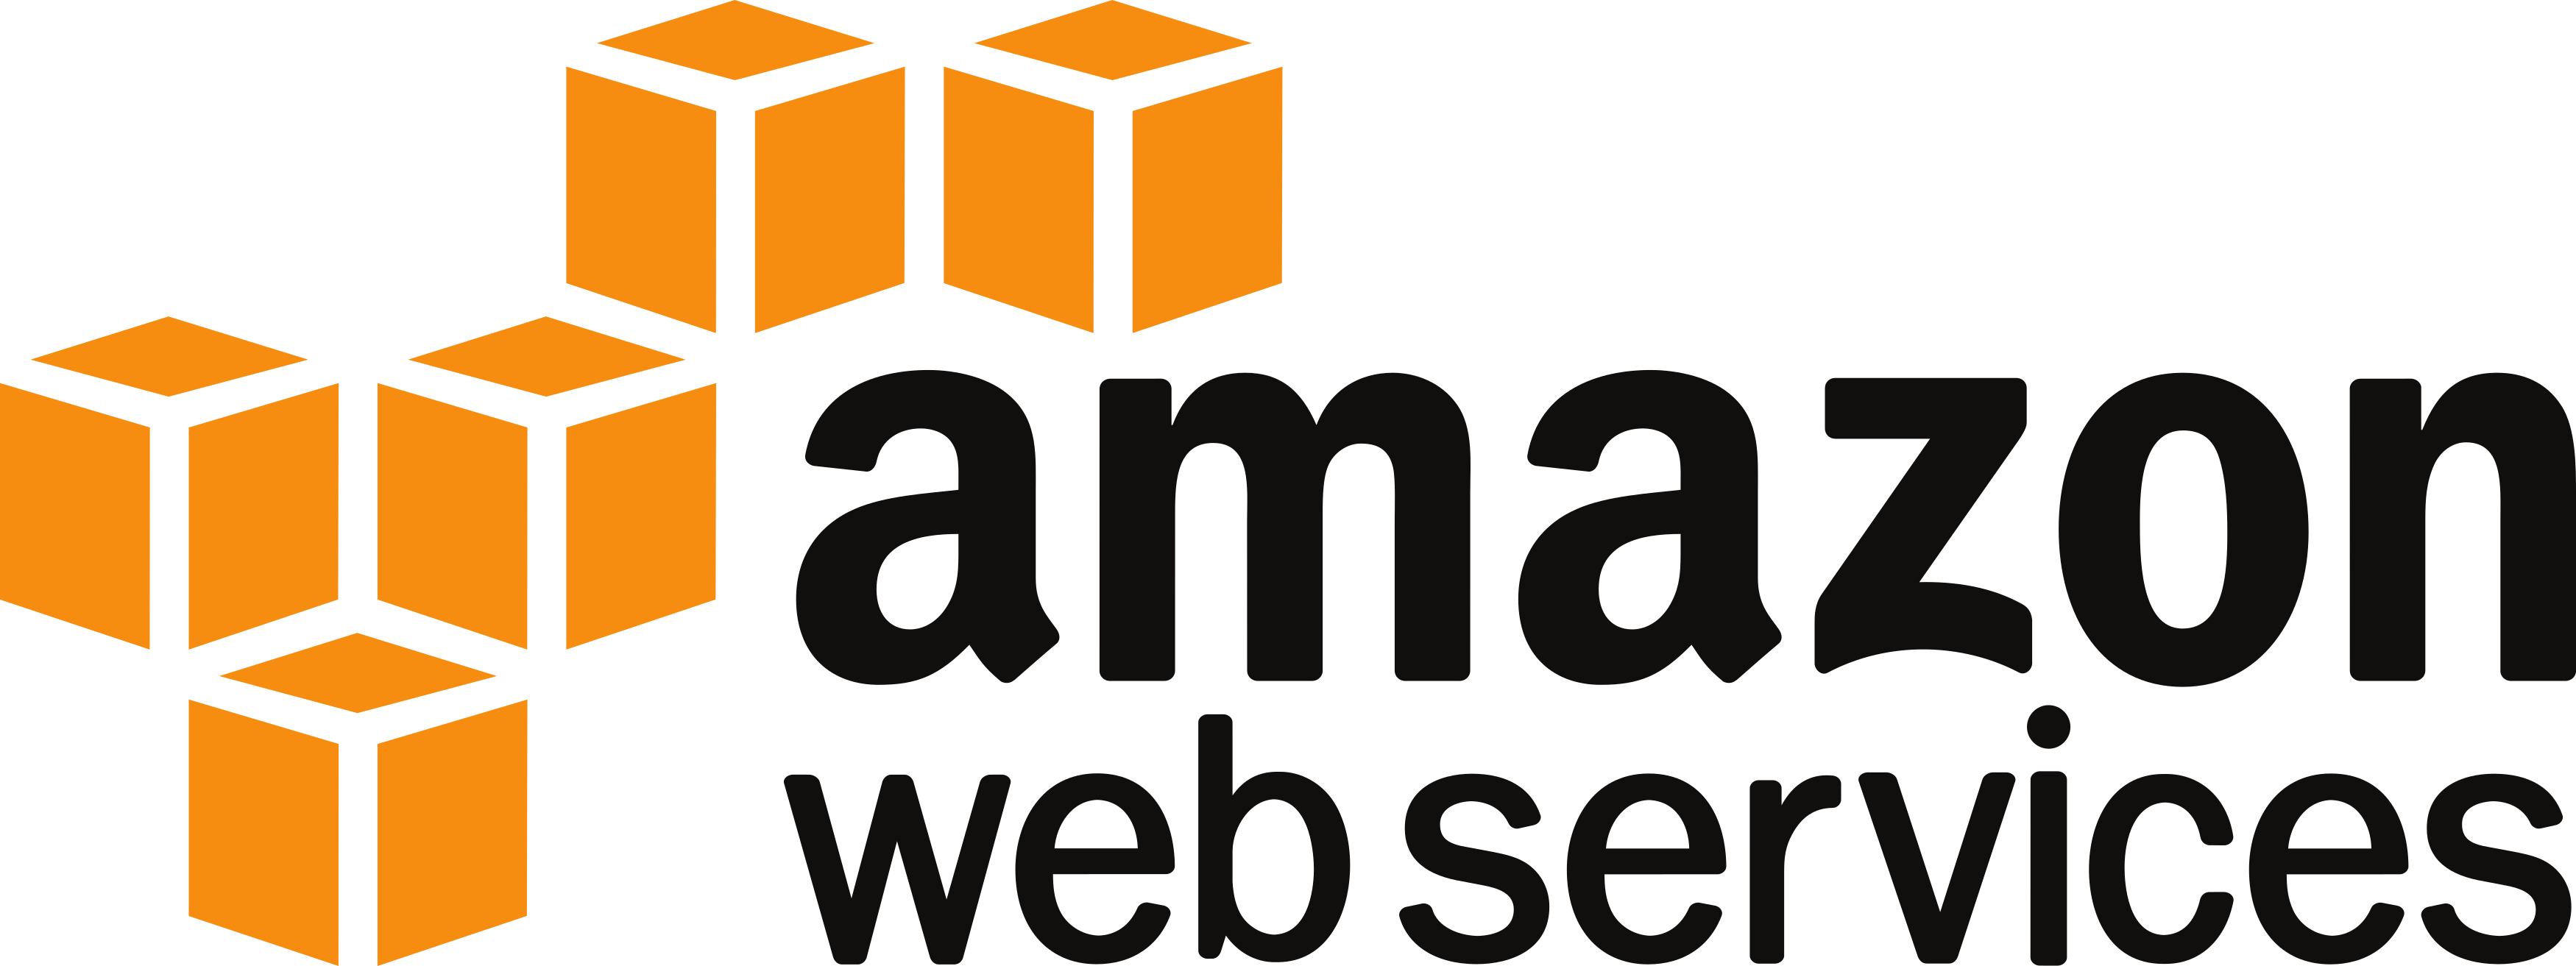 AWS, Amazon web services logo.